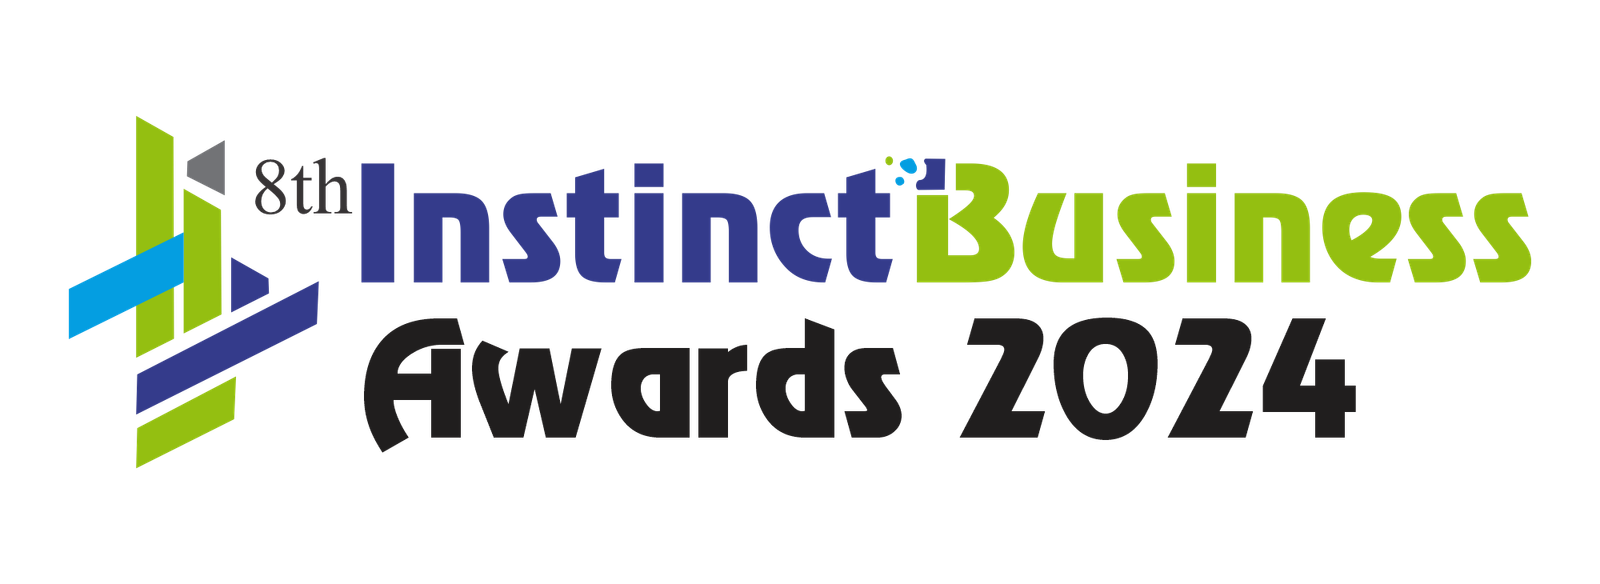 Instinct Business Awards